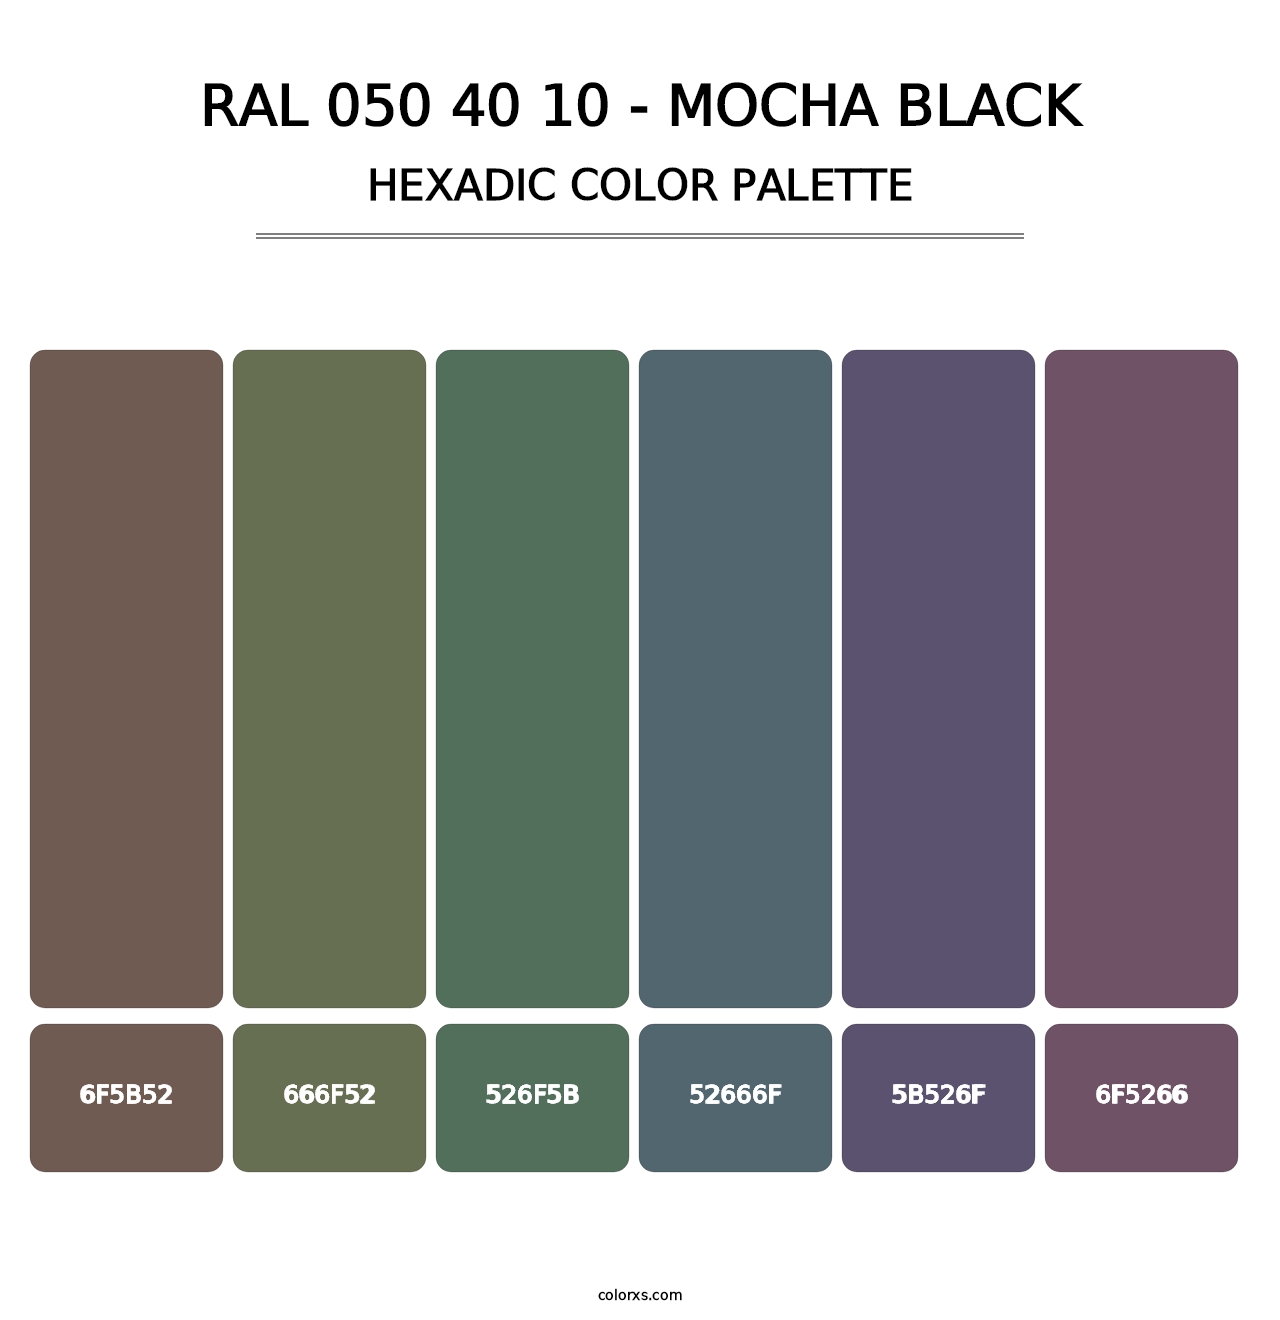 RAL 050 40 10 - Mocha Black - Hexadic Color Palette